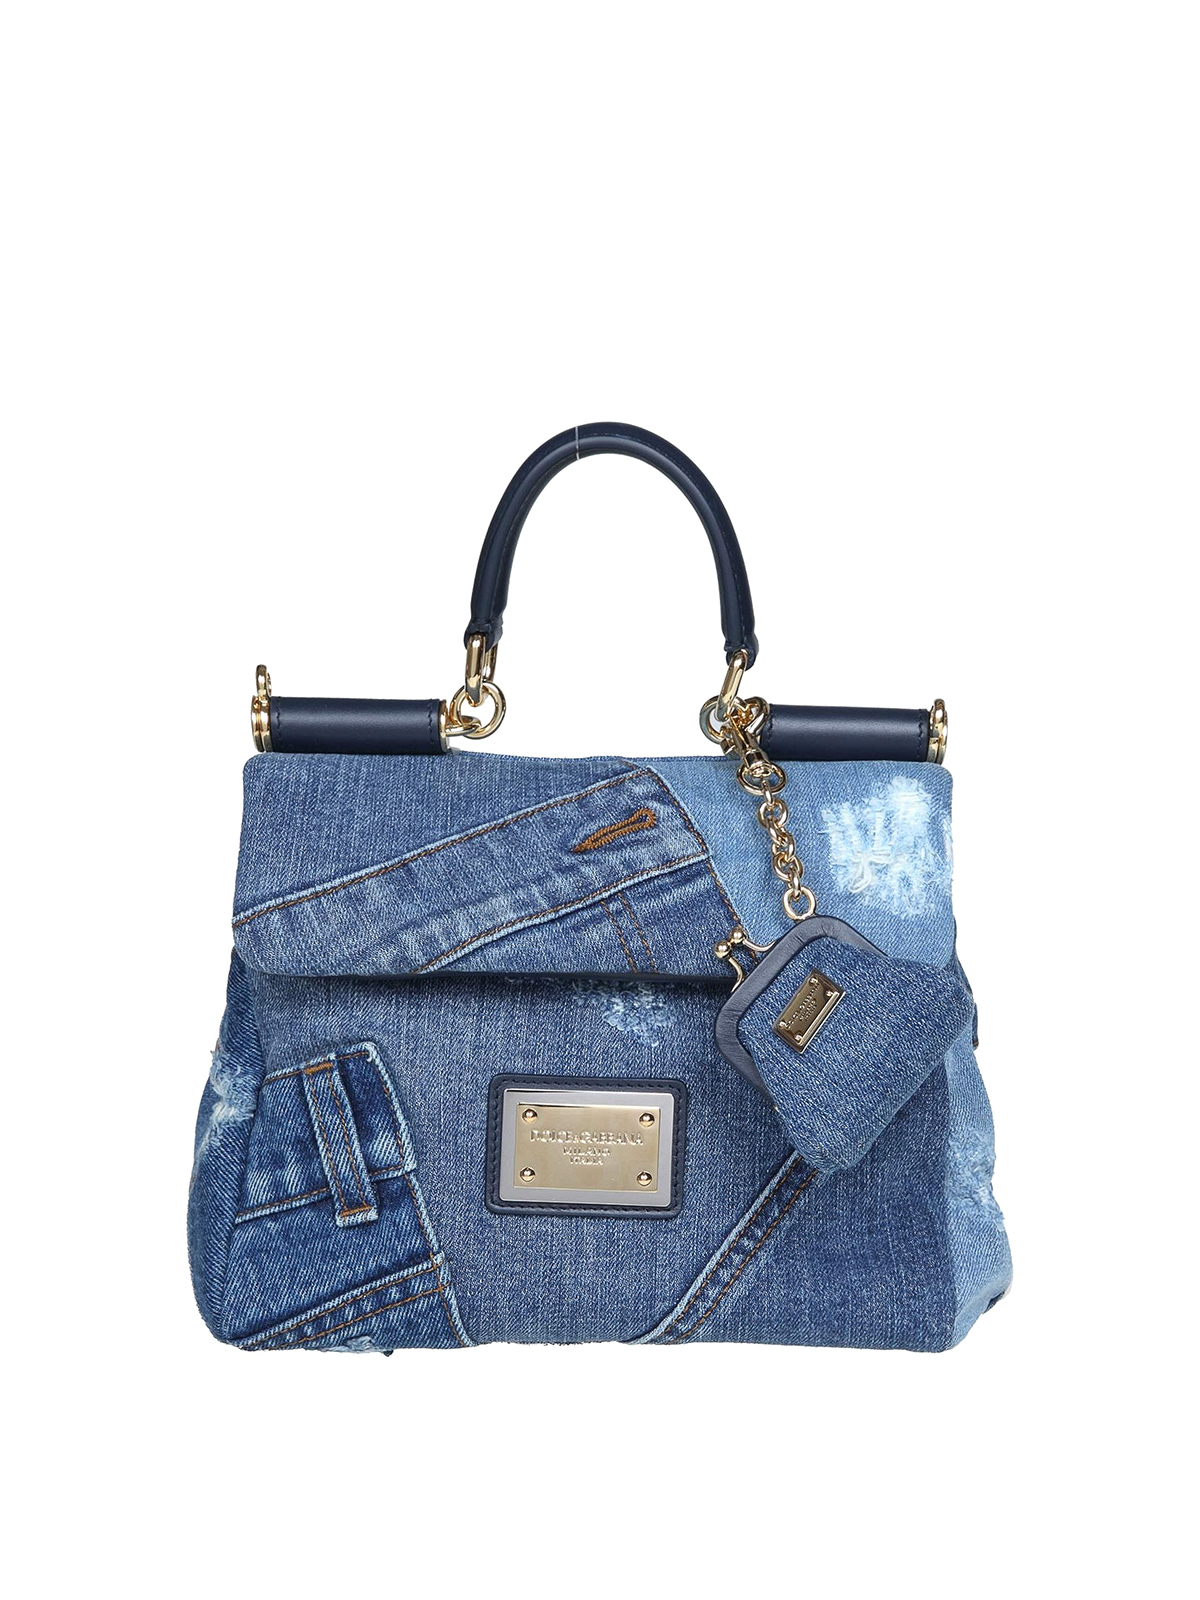 Dolce & Gabbana Medium Sicily Bag In Patchwork Denim in Blue